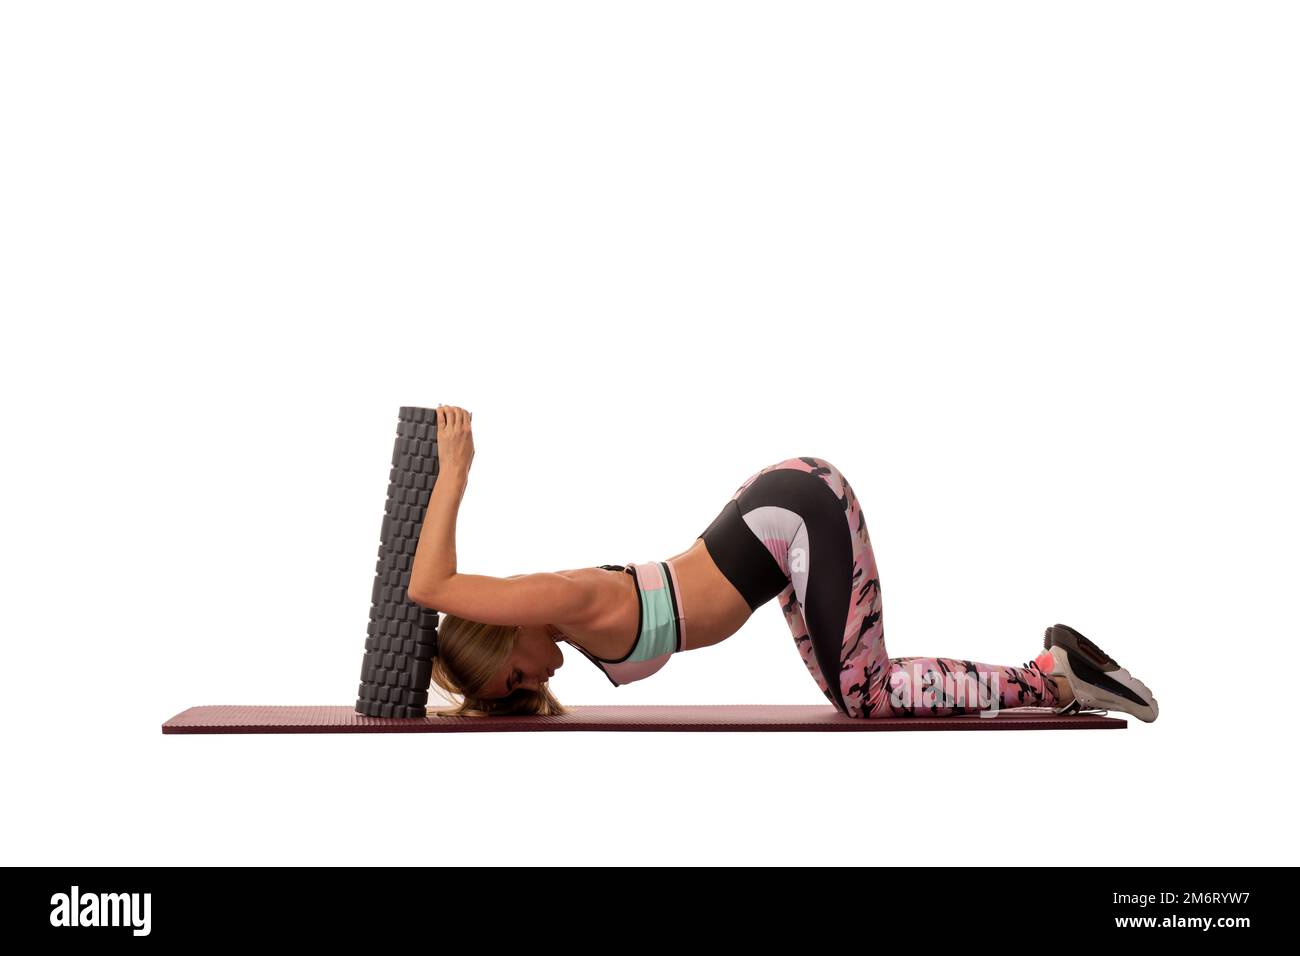 Anonyme Frau macht Plank-Übung auf Matte Stockfoto